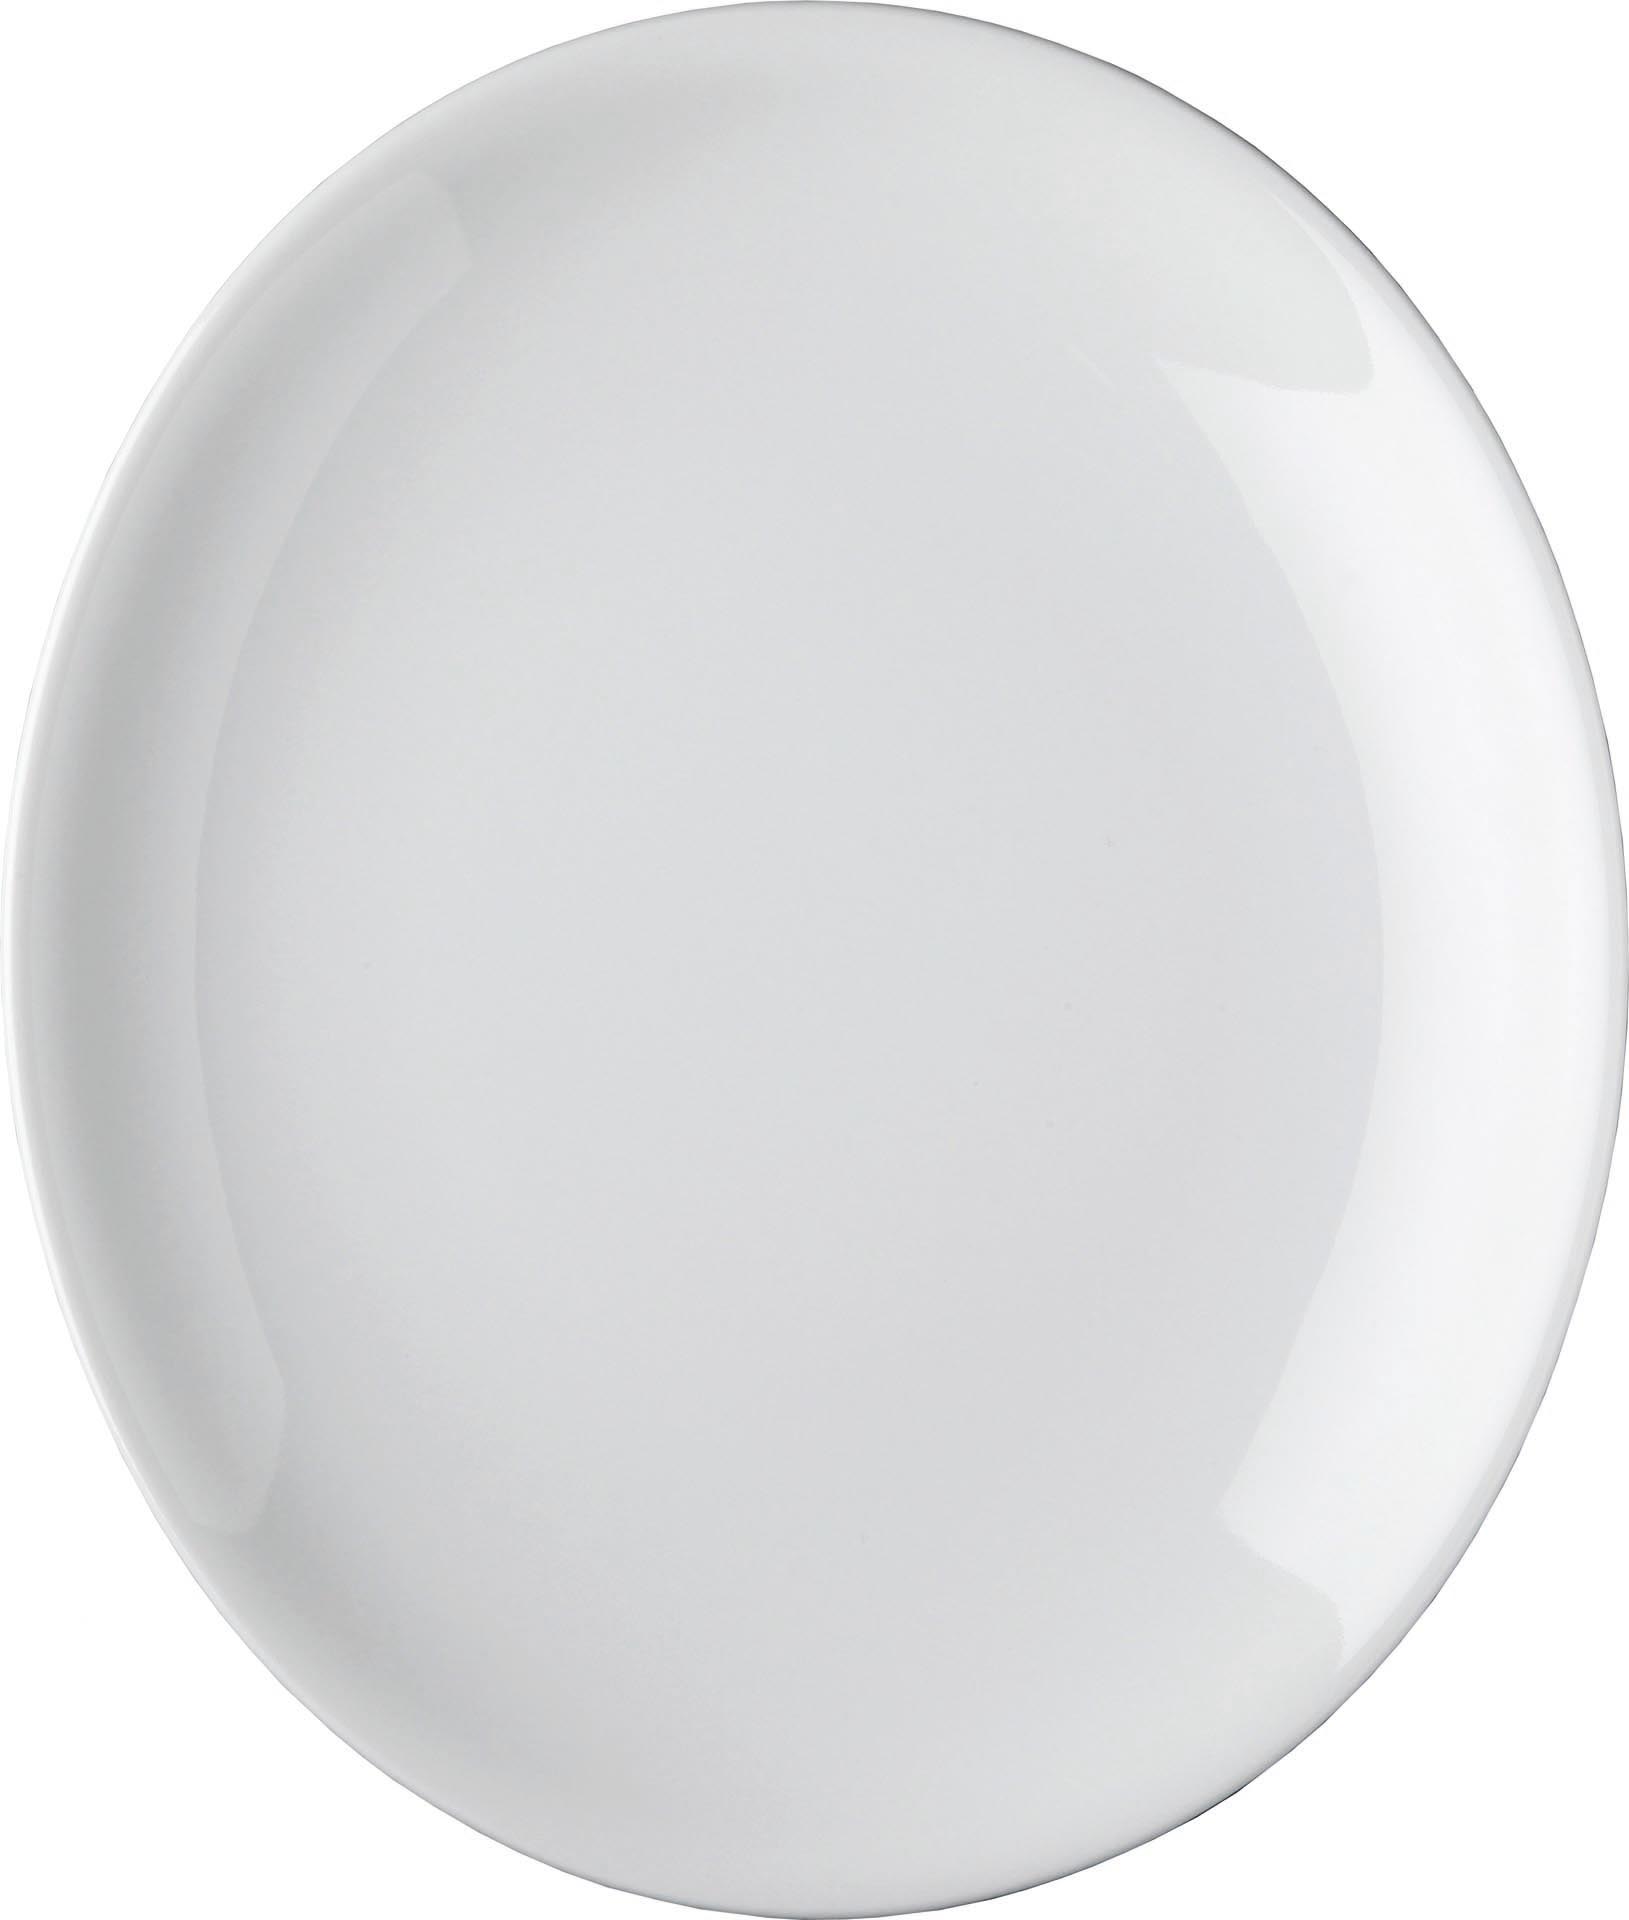 Platte oval "Rotondo" 34 x 29,5 cm Hotelporzellan